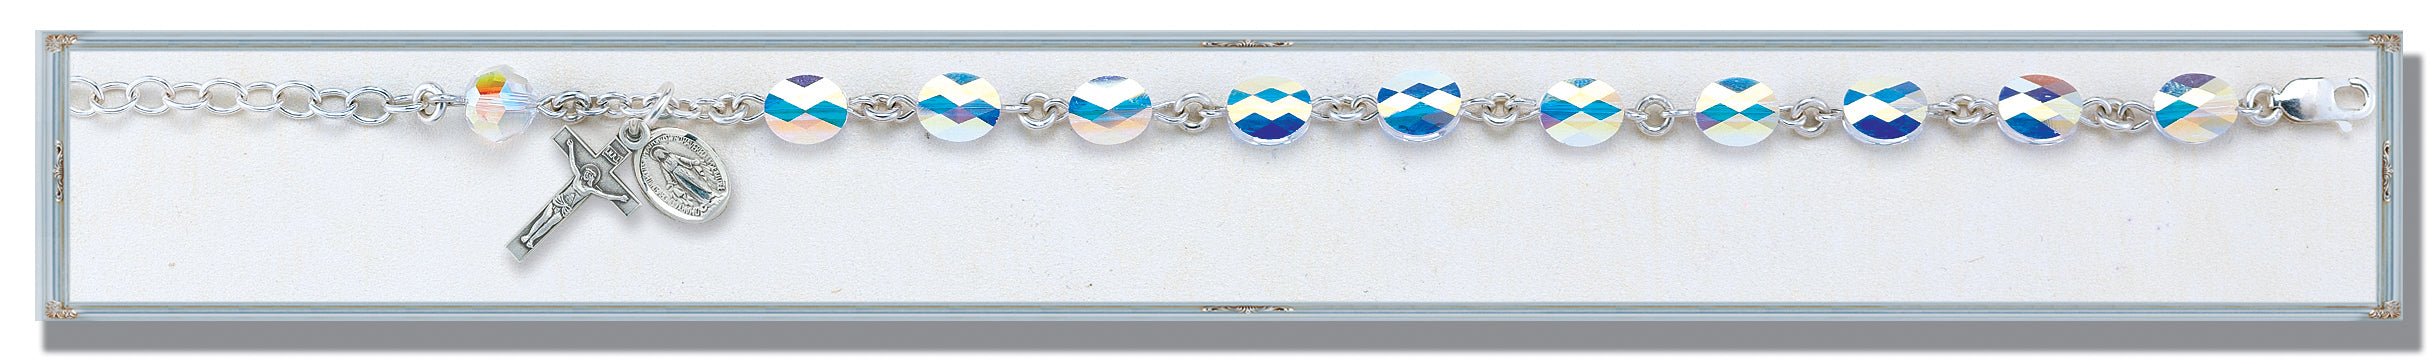 Aurora Swarovski Crystal Flat Oval Bracelet